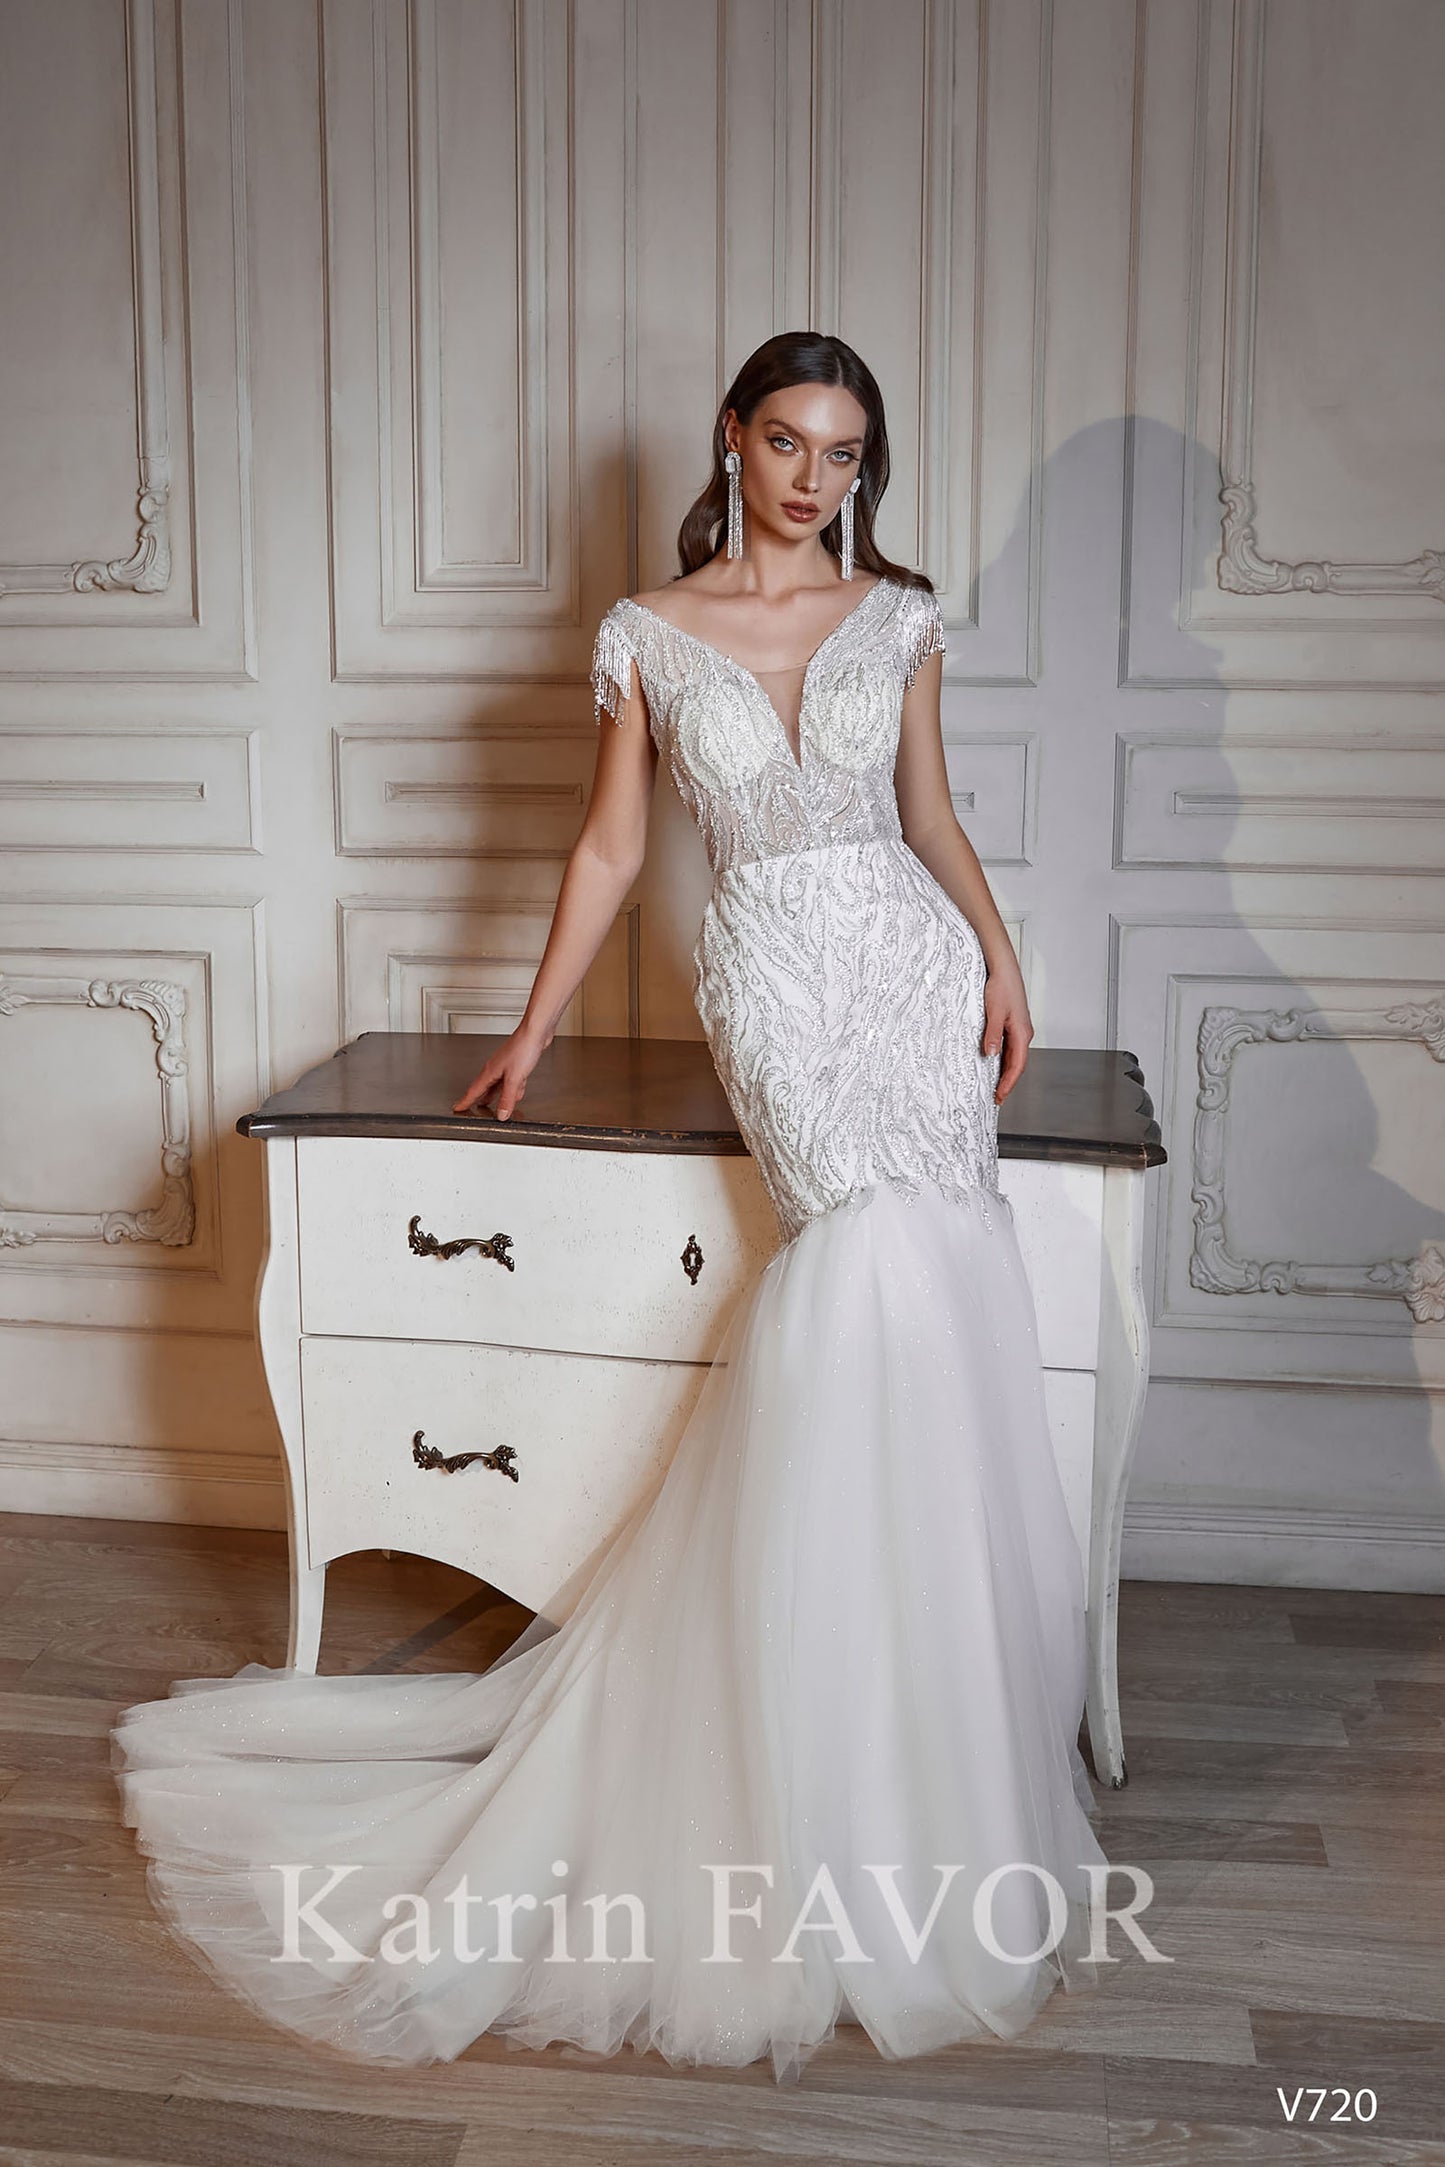 KatrinFAVORboutique-Mermaid embroidered wedding dress